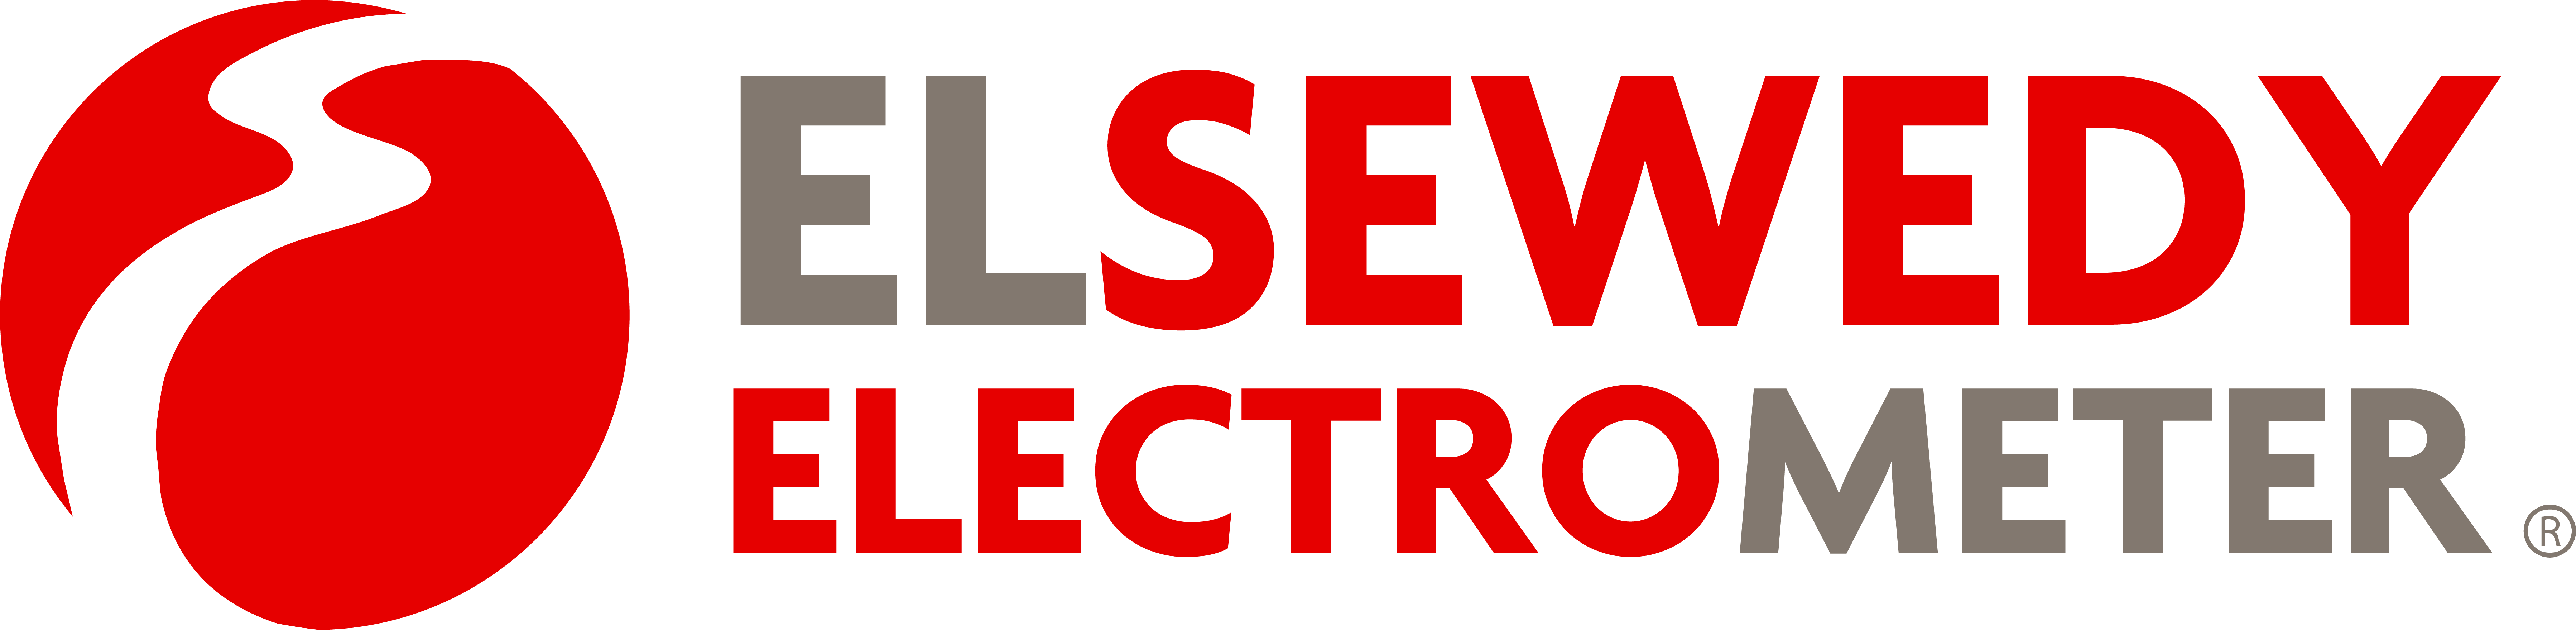 elsewedy logo